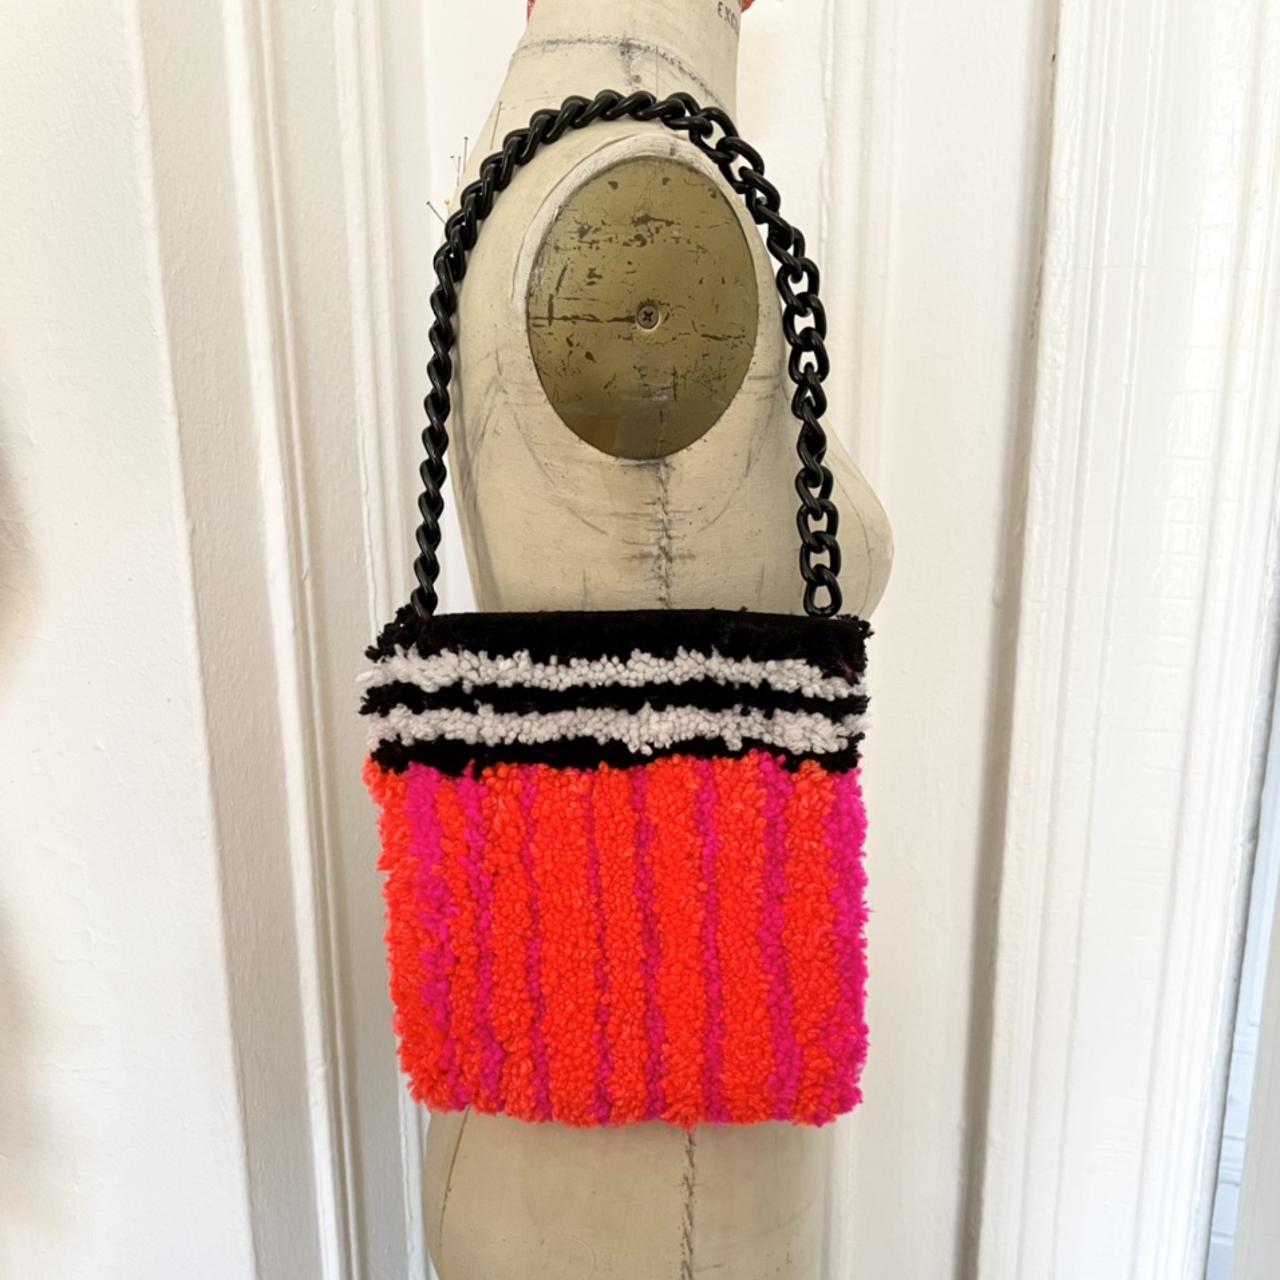 Product Image 2 - #Handmade #purse #bag #tufted #depop
Made